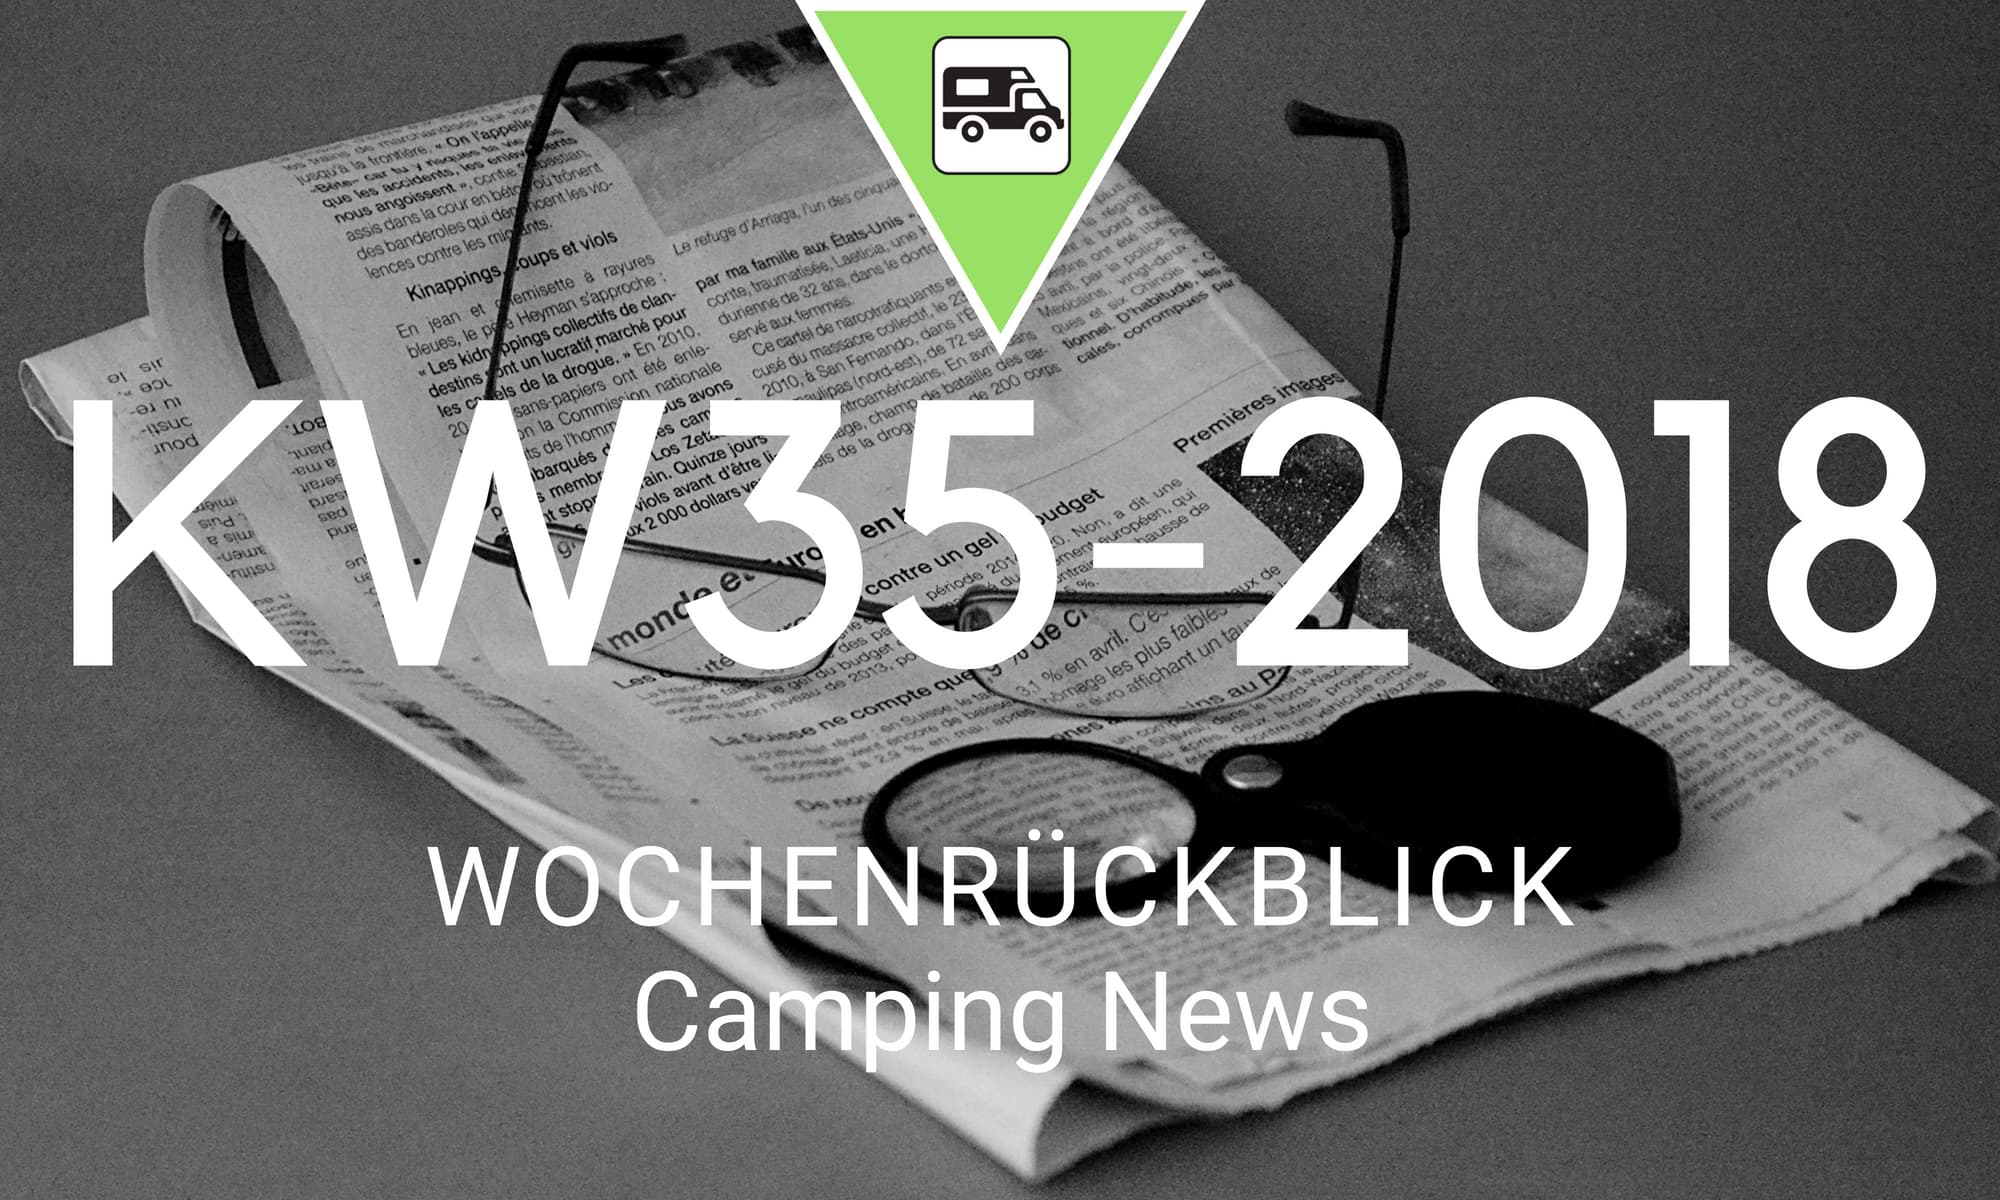 Wochenrückblick Camping News KW35-2018